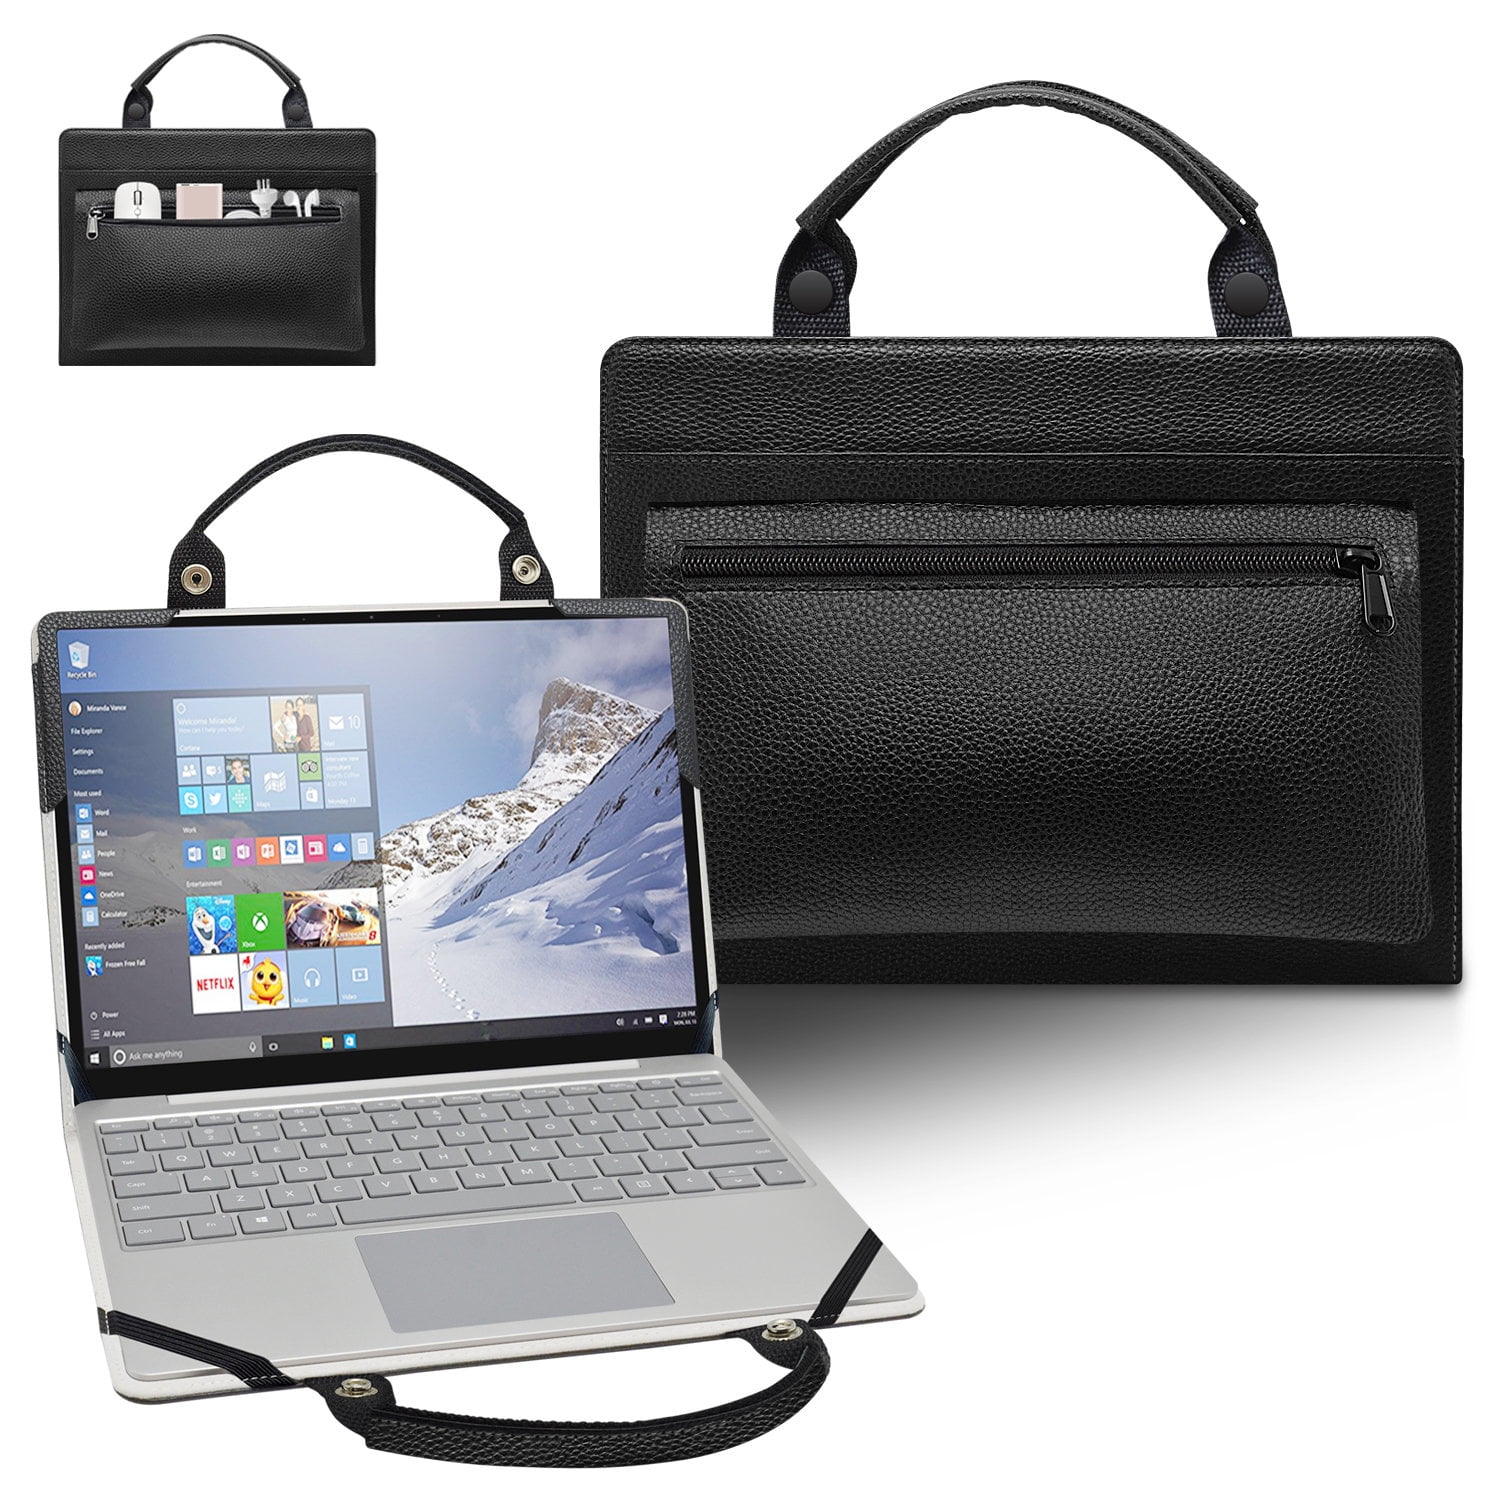 13.3" Laptop Case Bag for Lenovo IdeaPad Yoga 13,Yoga 2 Pro 13,Dell Vostro V3300 